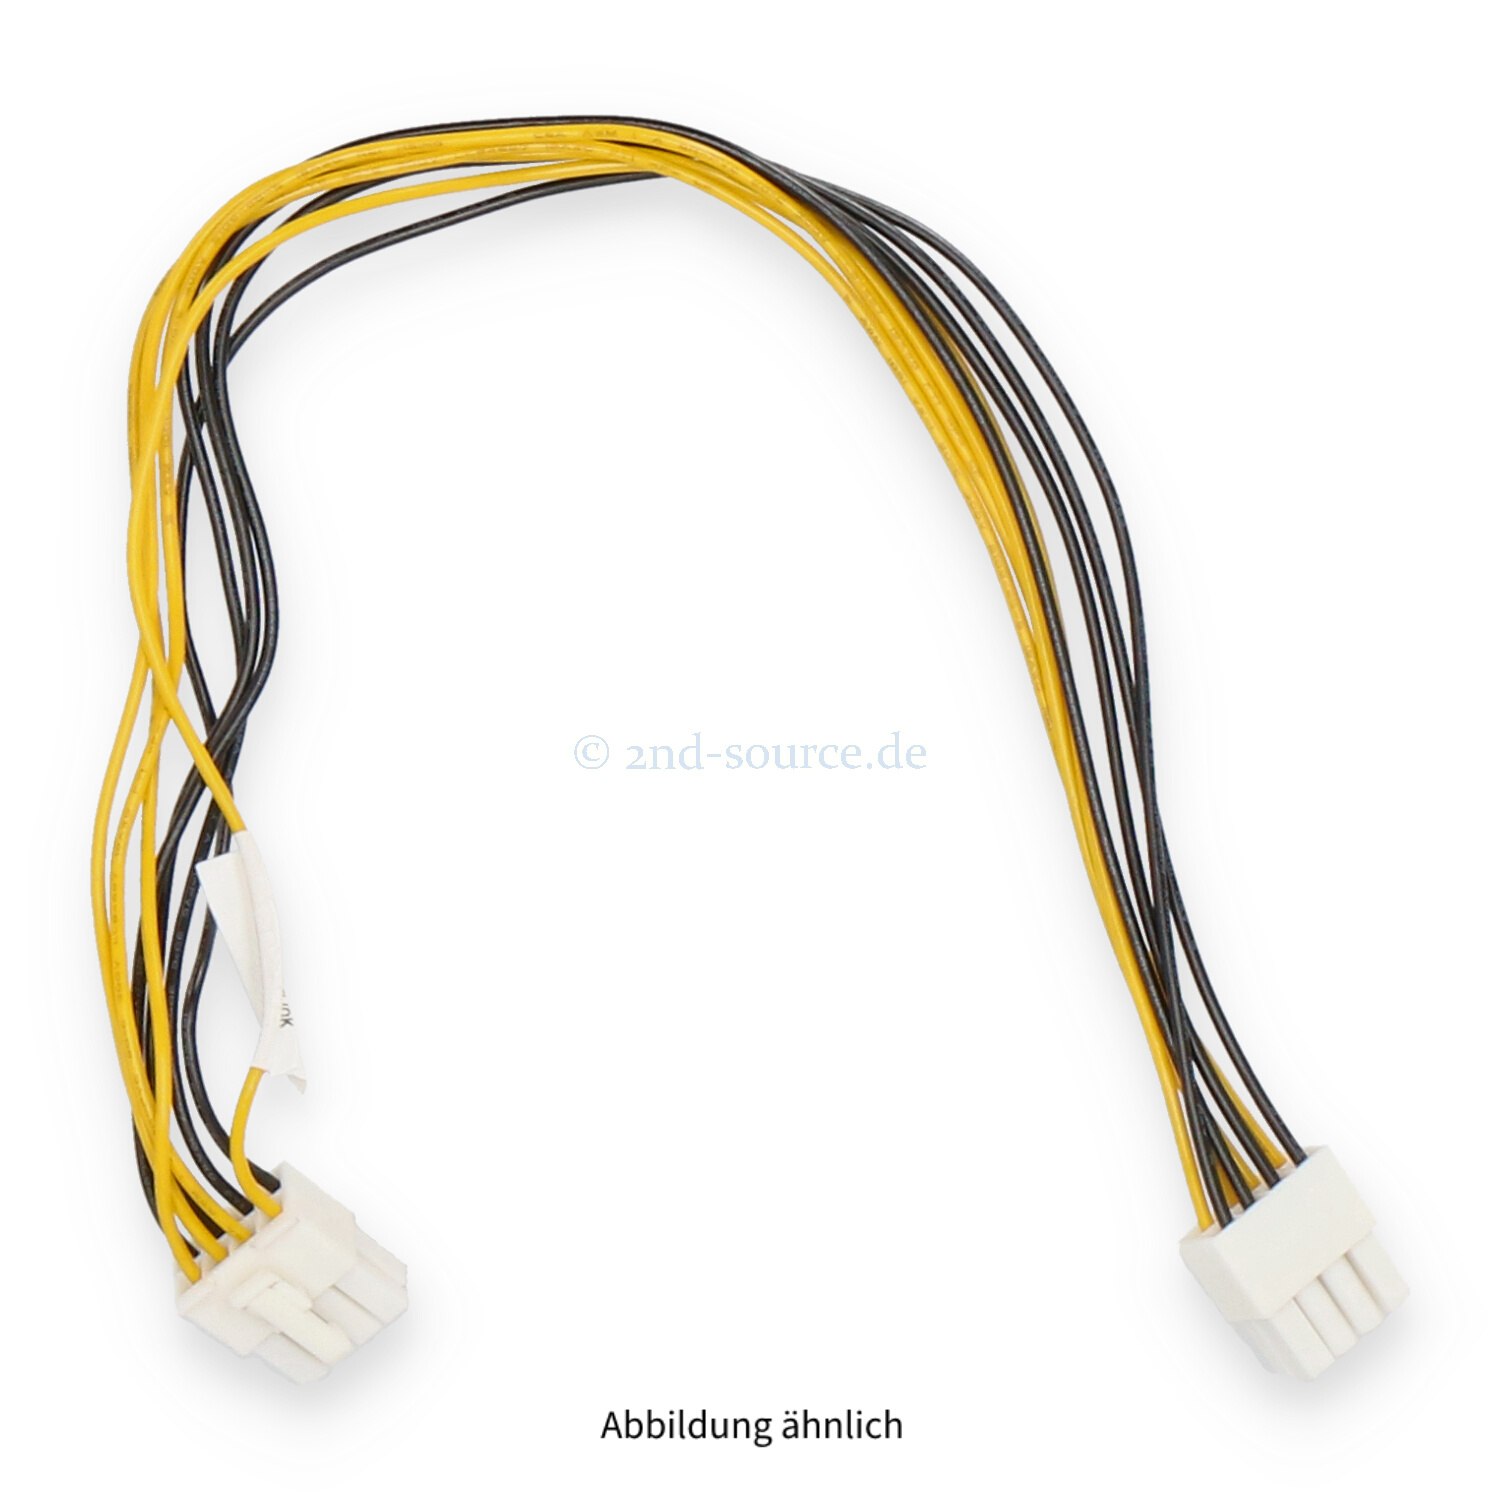 Gigabyte 0.35m 8-pin to 8-pin GPU Cable G291-281 25CRI-300307-B0R